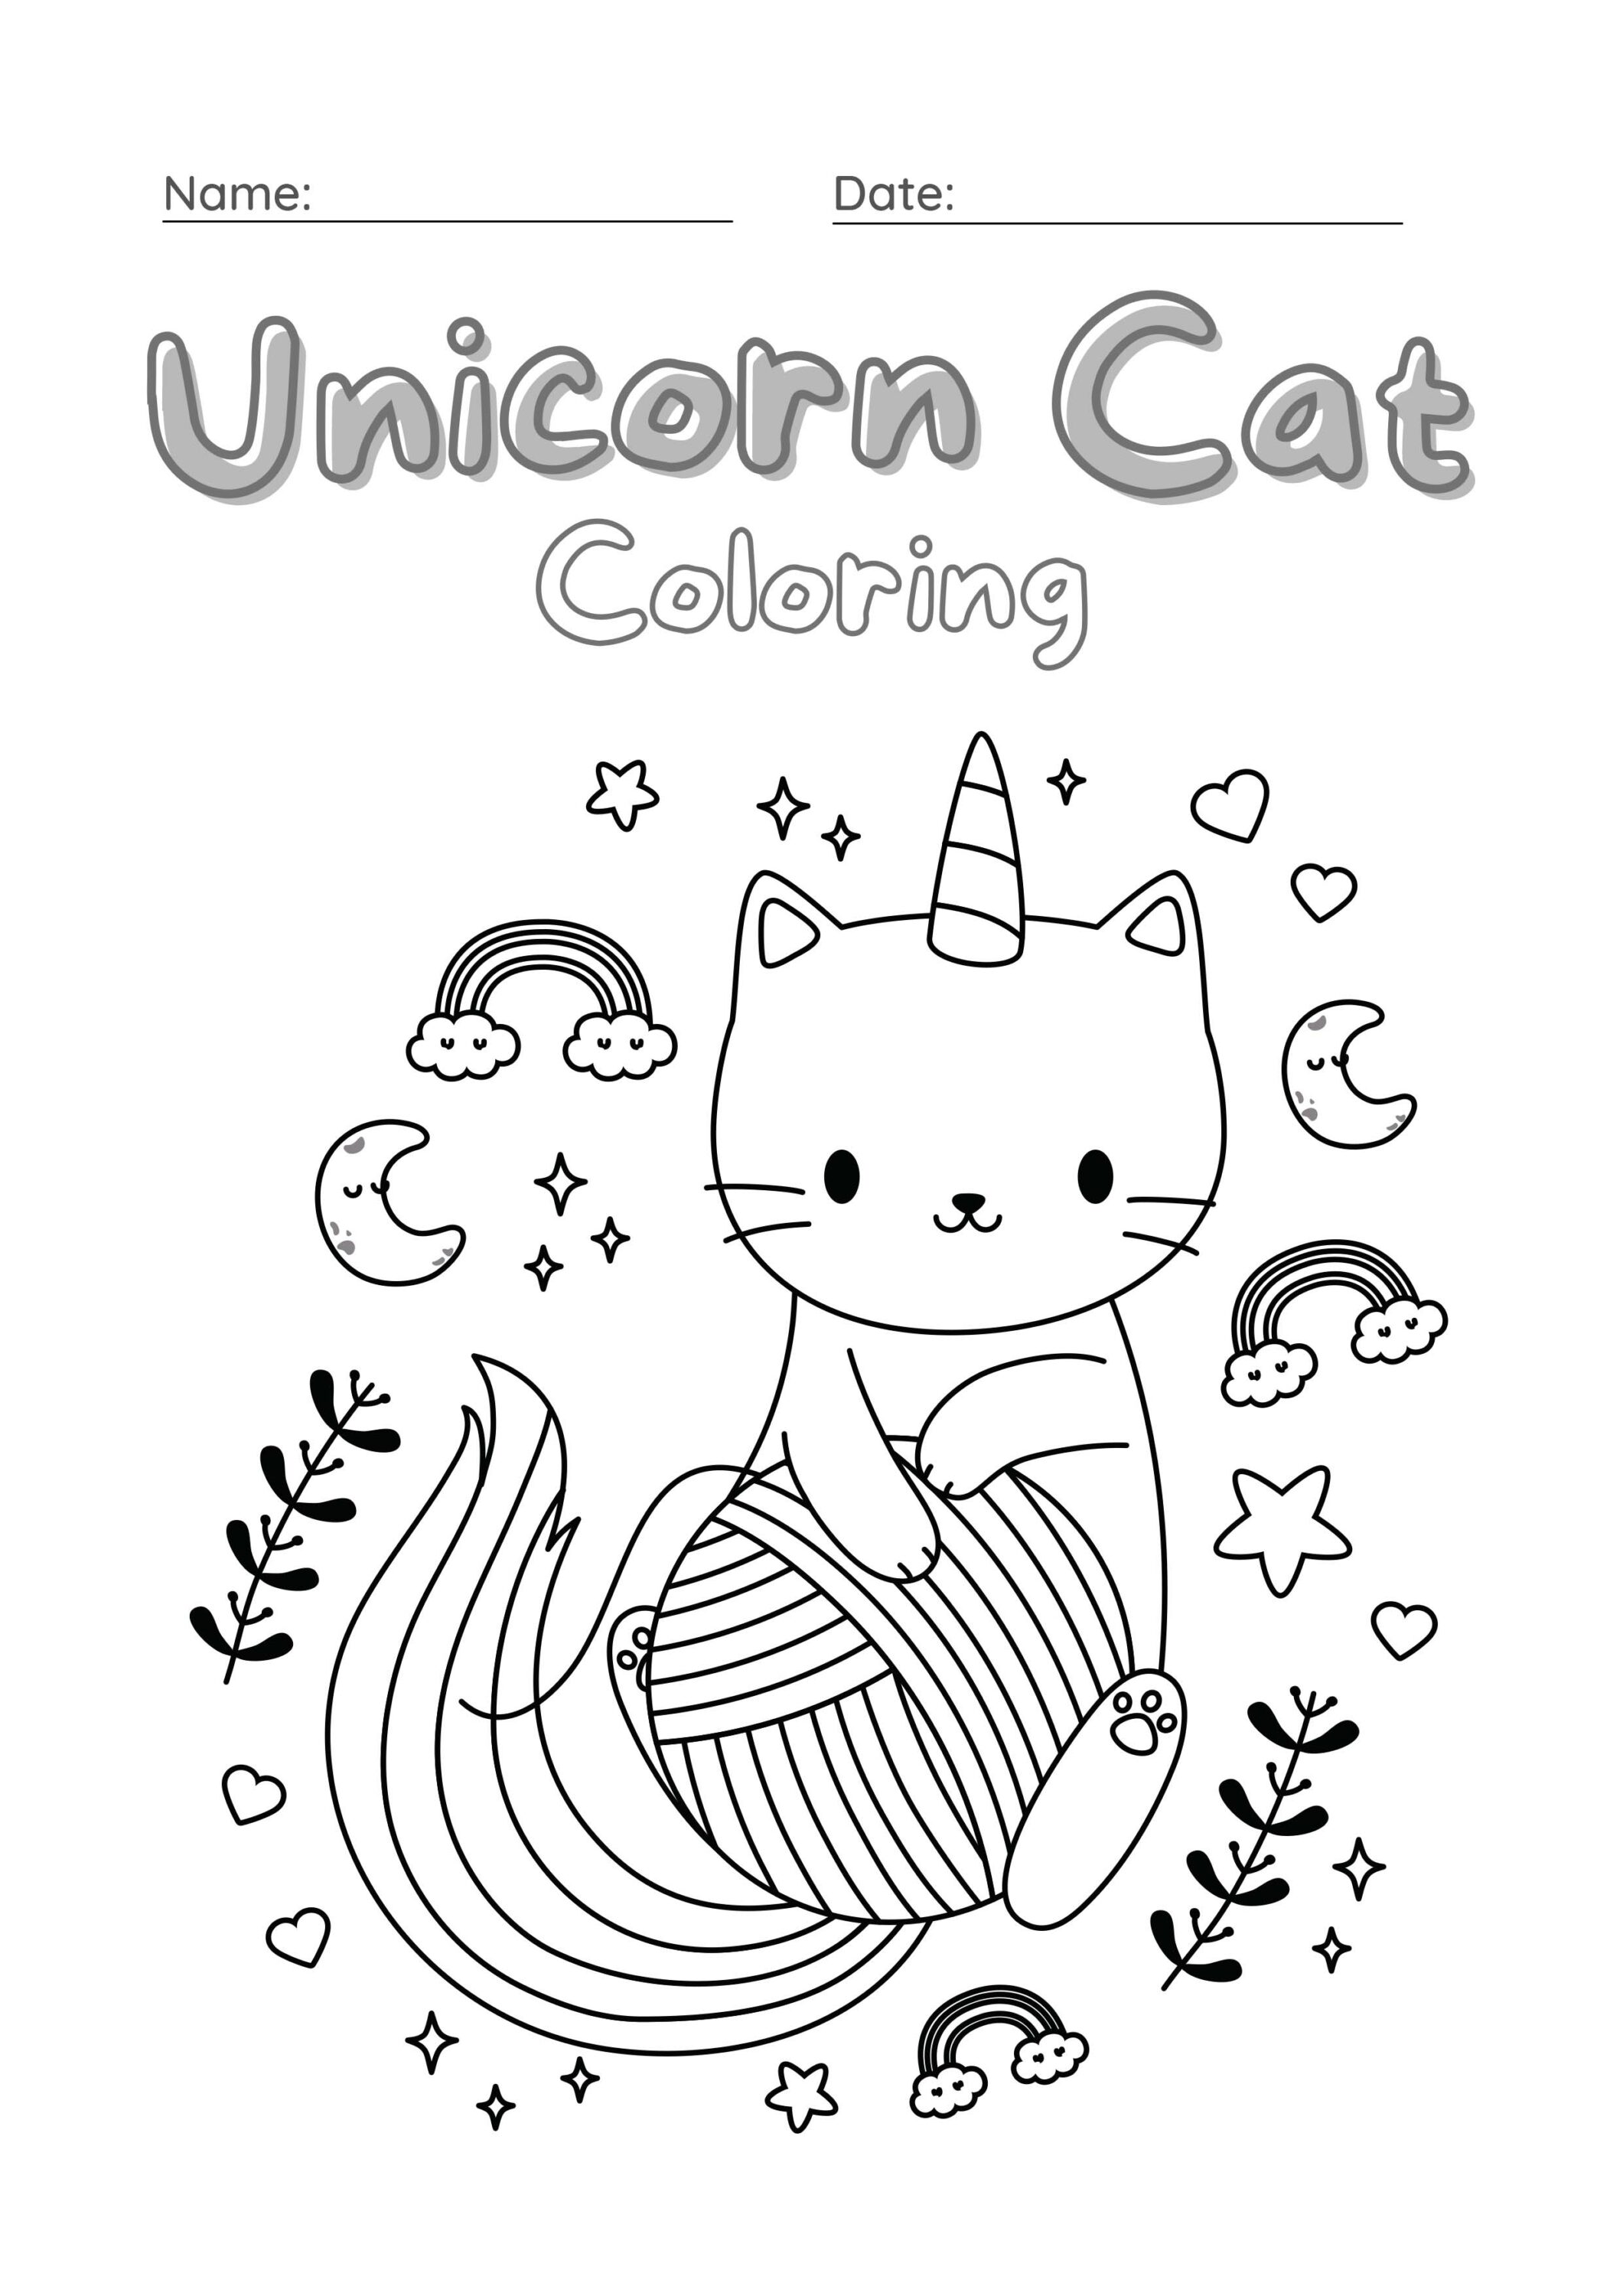 Unicorn Cat Coloring Worksheet Set 24